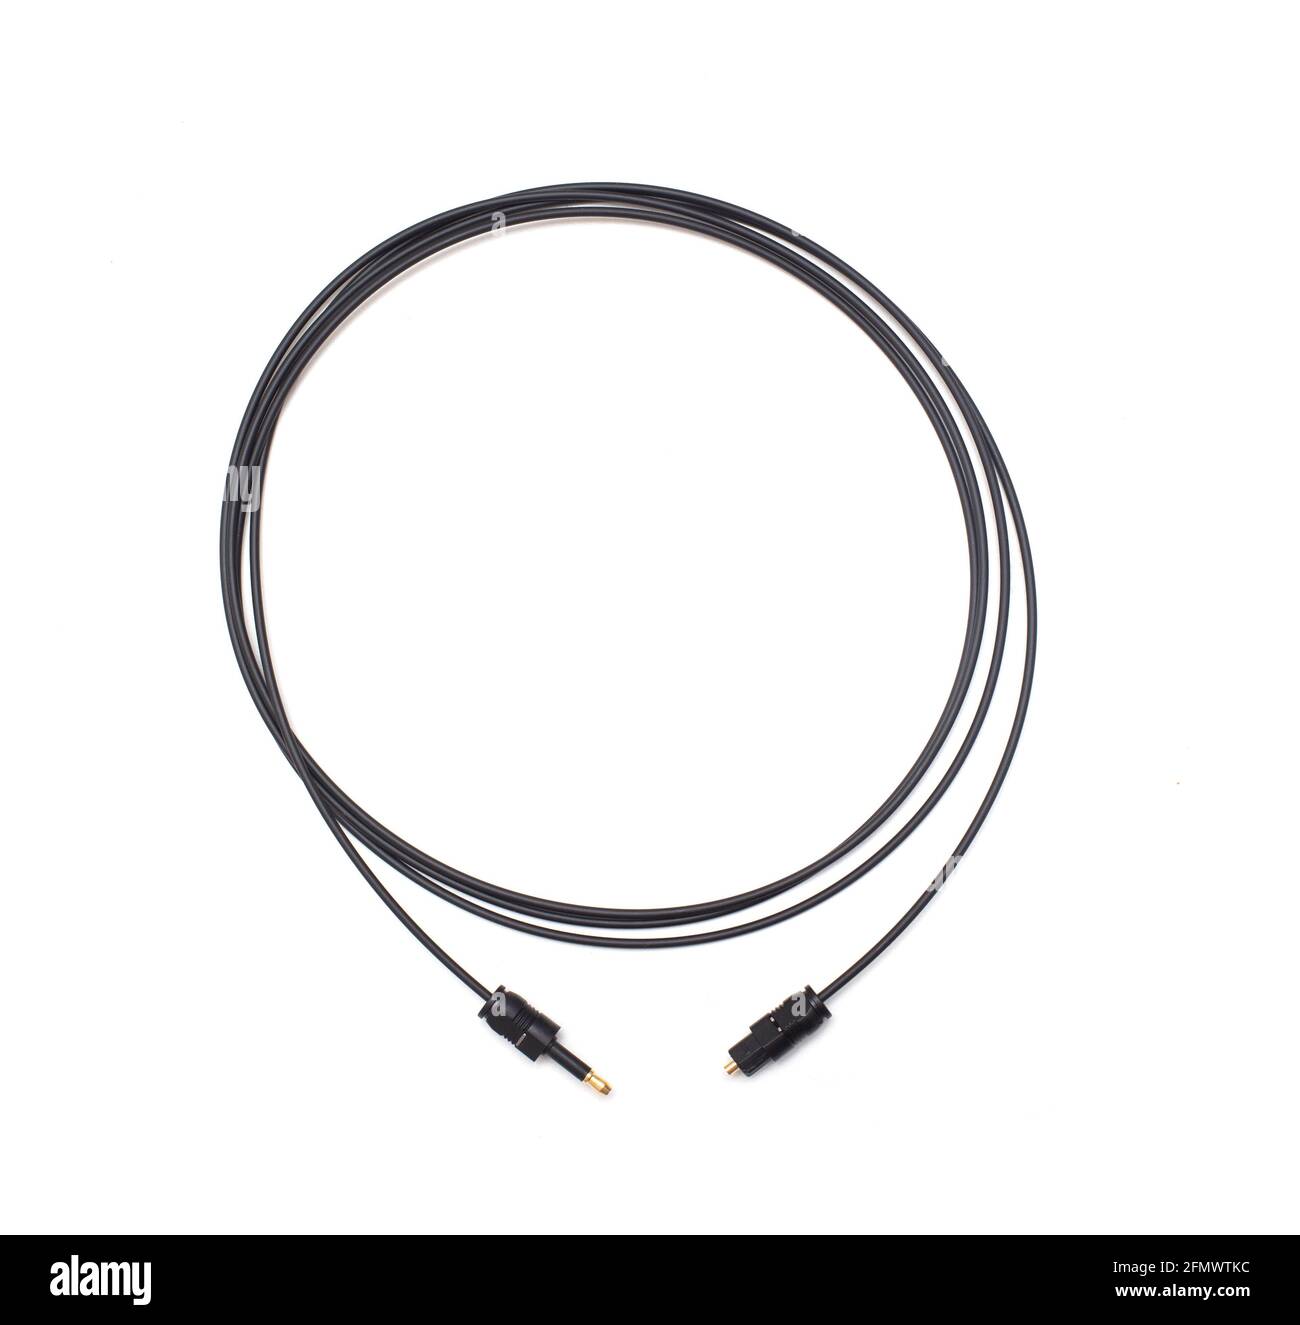 optical digital audio cable on white background, isolate. Technology Stock Photo